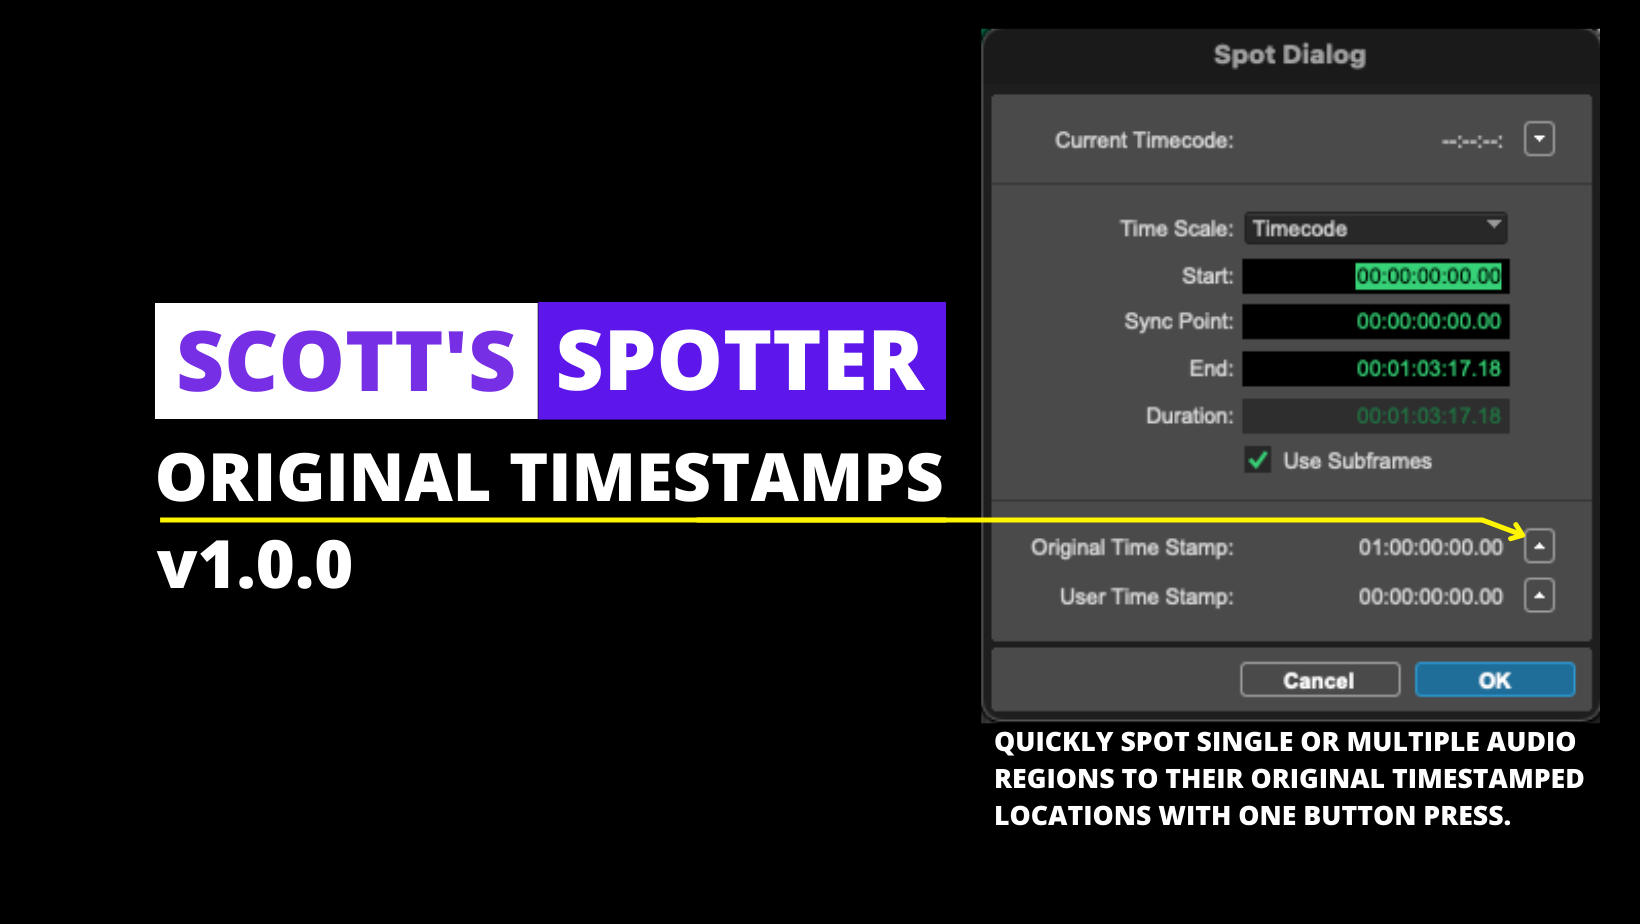 Scott's Spotter Original Timestamps